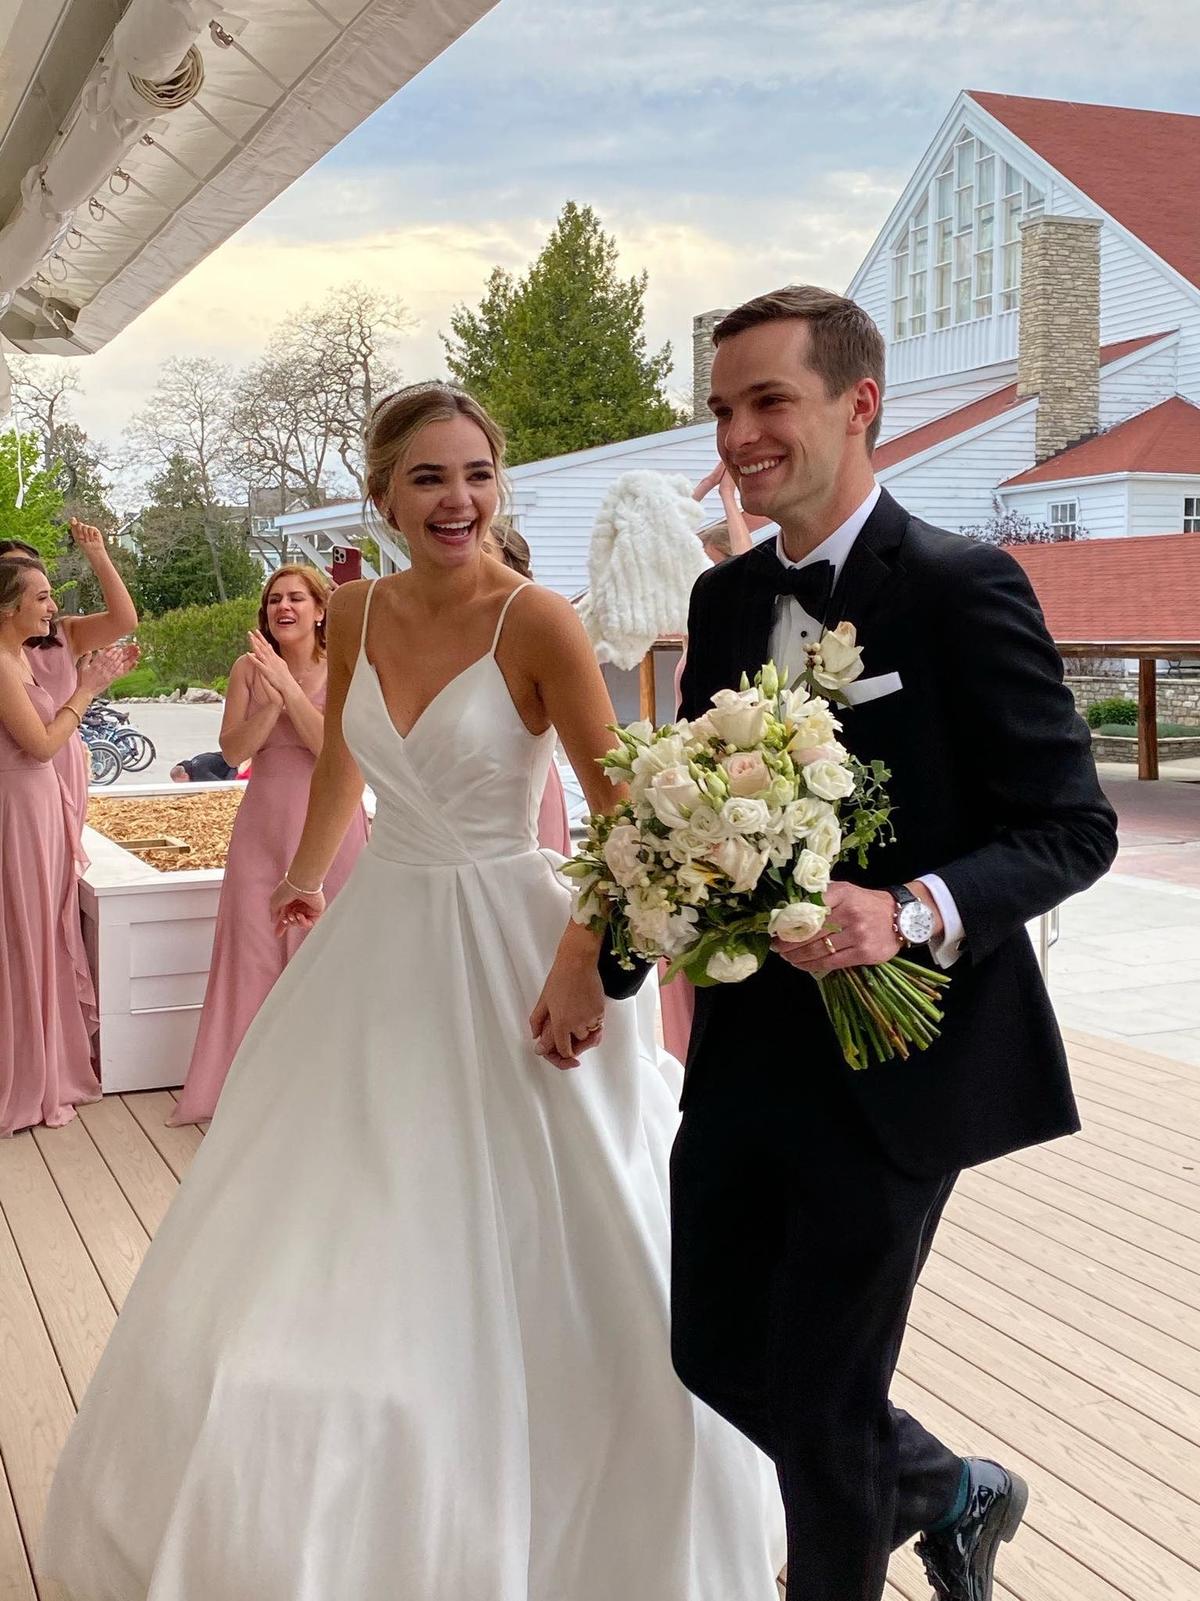 Jake and Elizabeth arriving at their relocated wedding reception. (Courtesy of Susan Weatherhead via <a href="https://www.facebook.com/jake.landuyt">Jake Landuyt</a>)